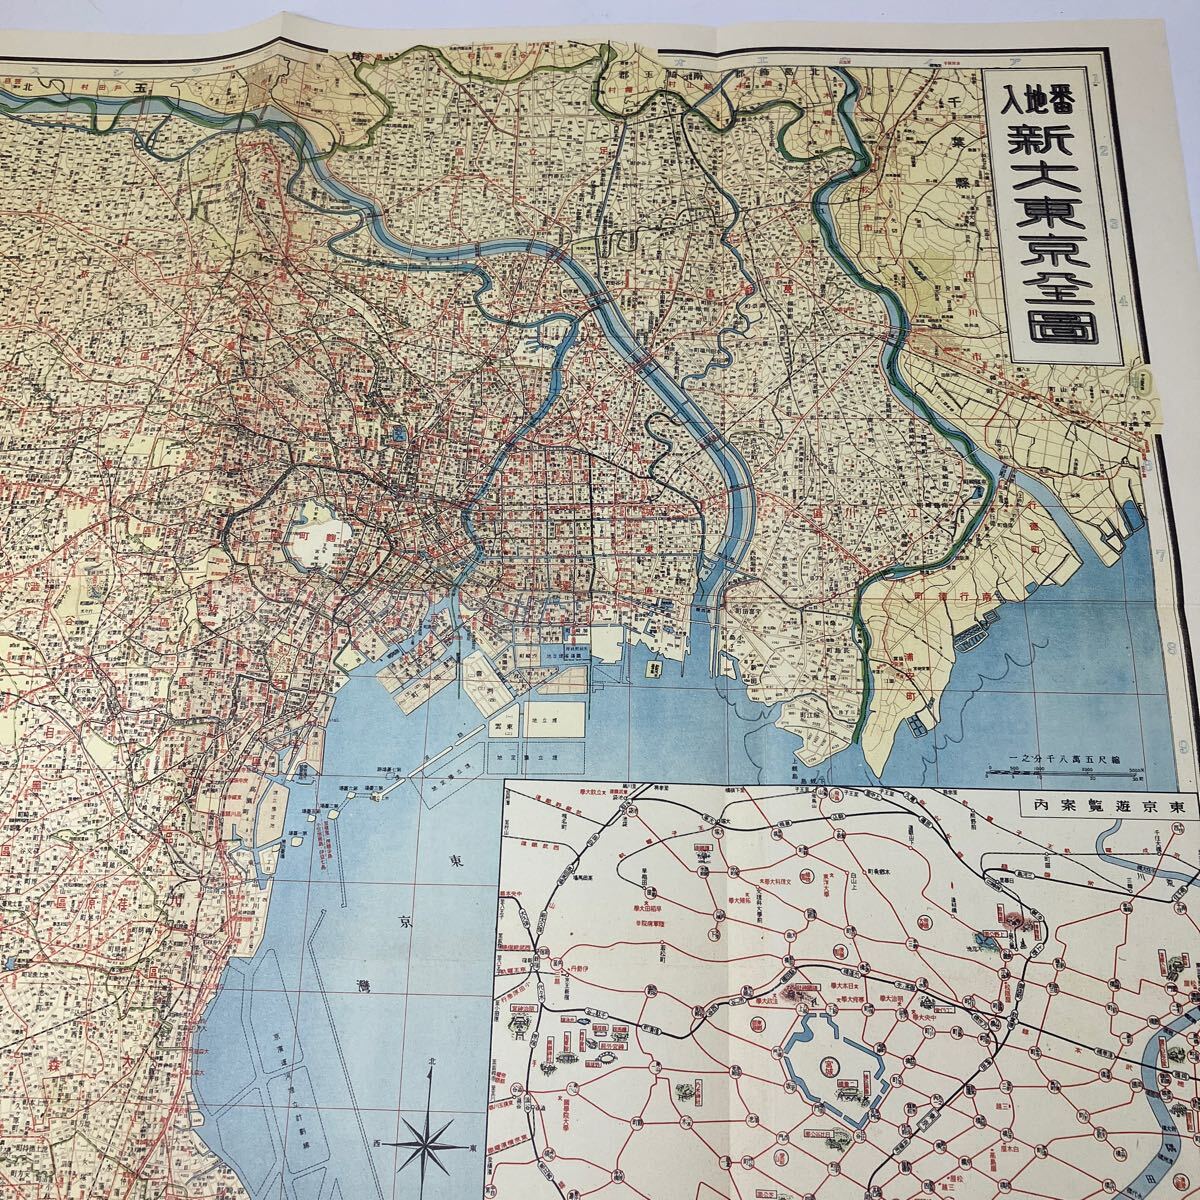 Y0321m【地図】まとめ11枚 東京 明治32年 青梅 東京西北部 東京東南部 八王子 東京東北部 東京西南部 古地図の画像4